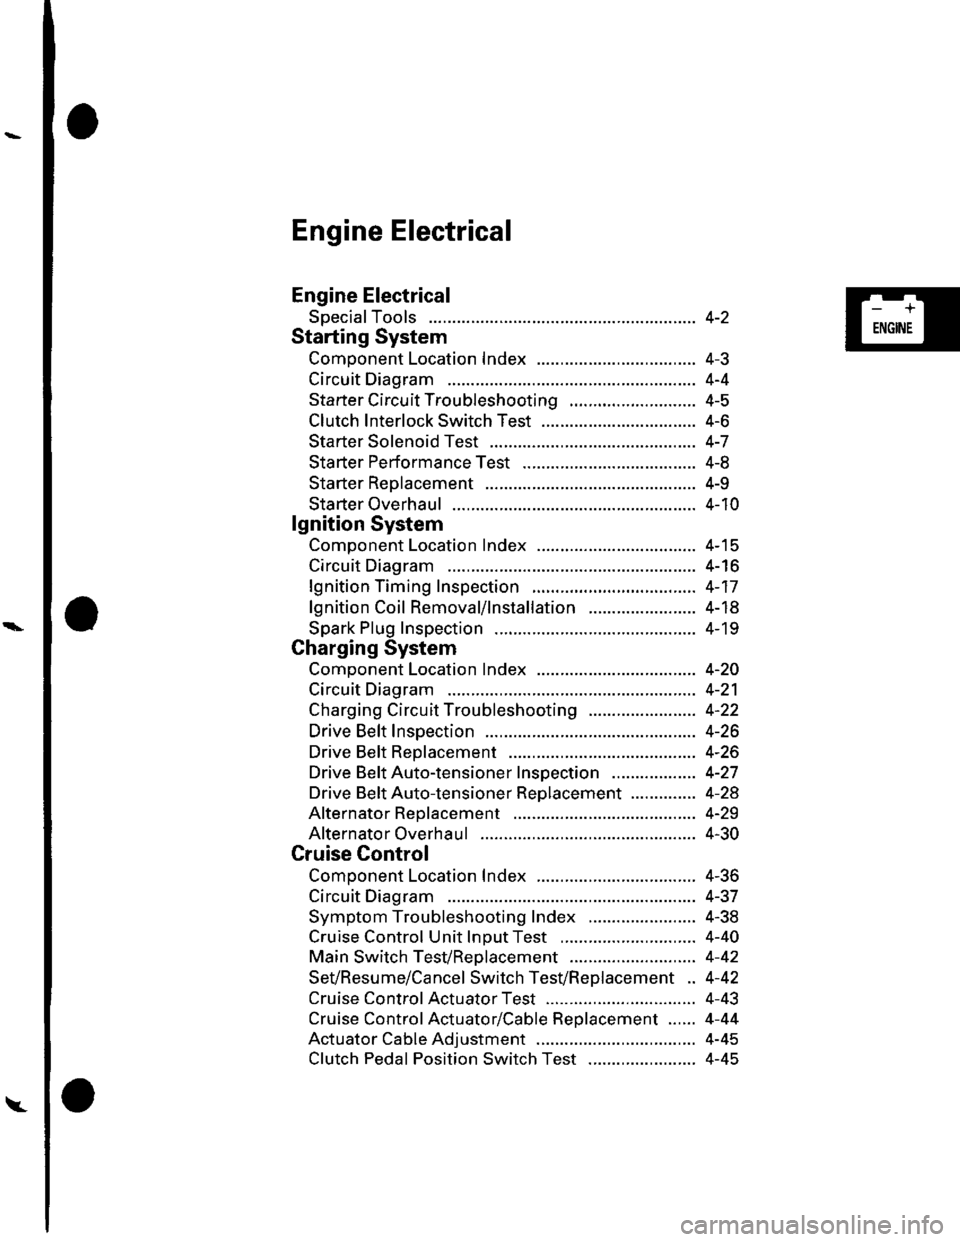 HONDA CIVIC 2003 7.G Workshop Manual \.
Engine Electrical
Engine Electrical
SpecialTools
Starting System
Comoonent Location Index ...............
Circuit Diagram
Starter Circu it Troubleshooting
Clutch Interlock Switch Test
Starter Solen